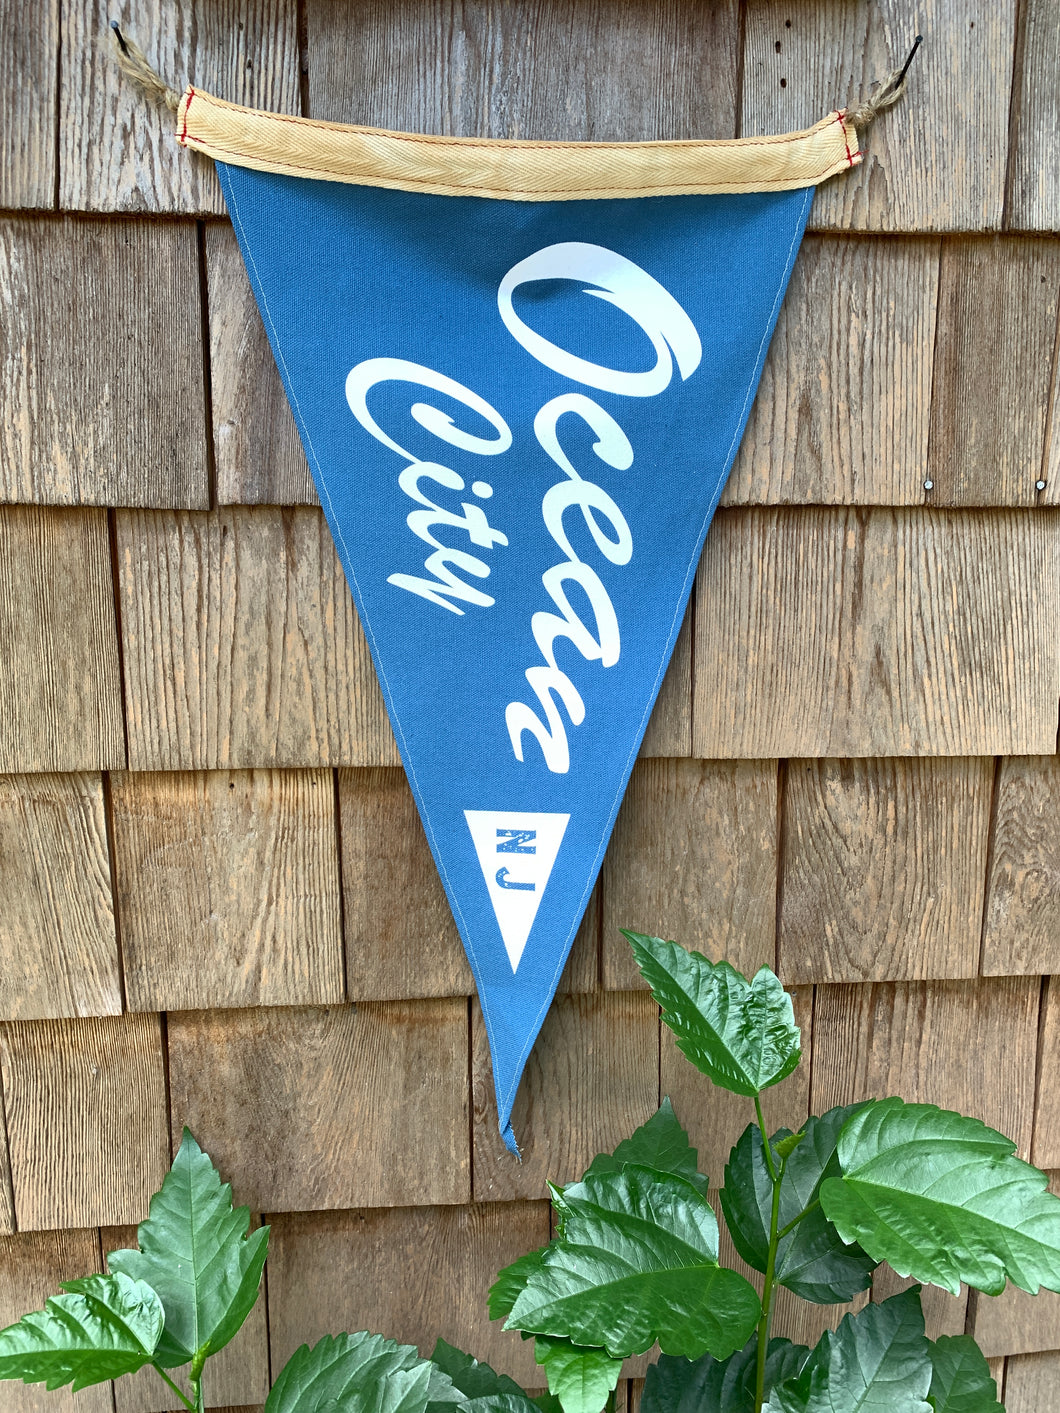 Ocean City - Town Flag / pennant